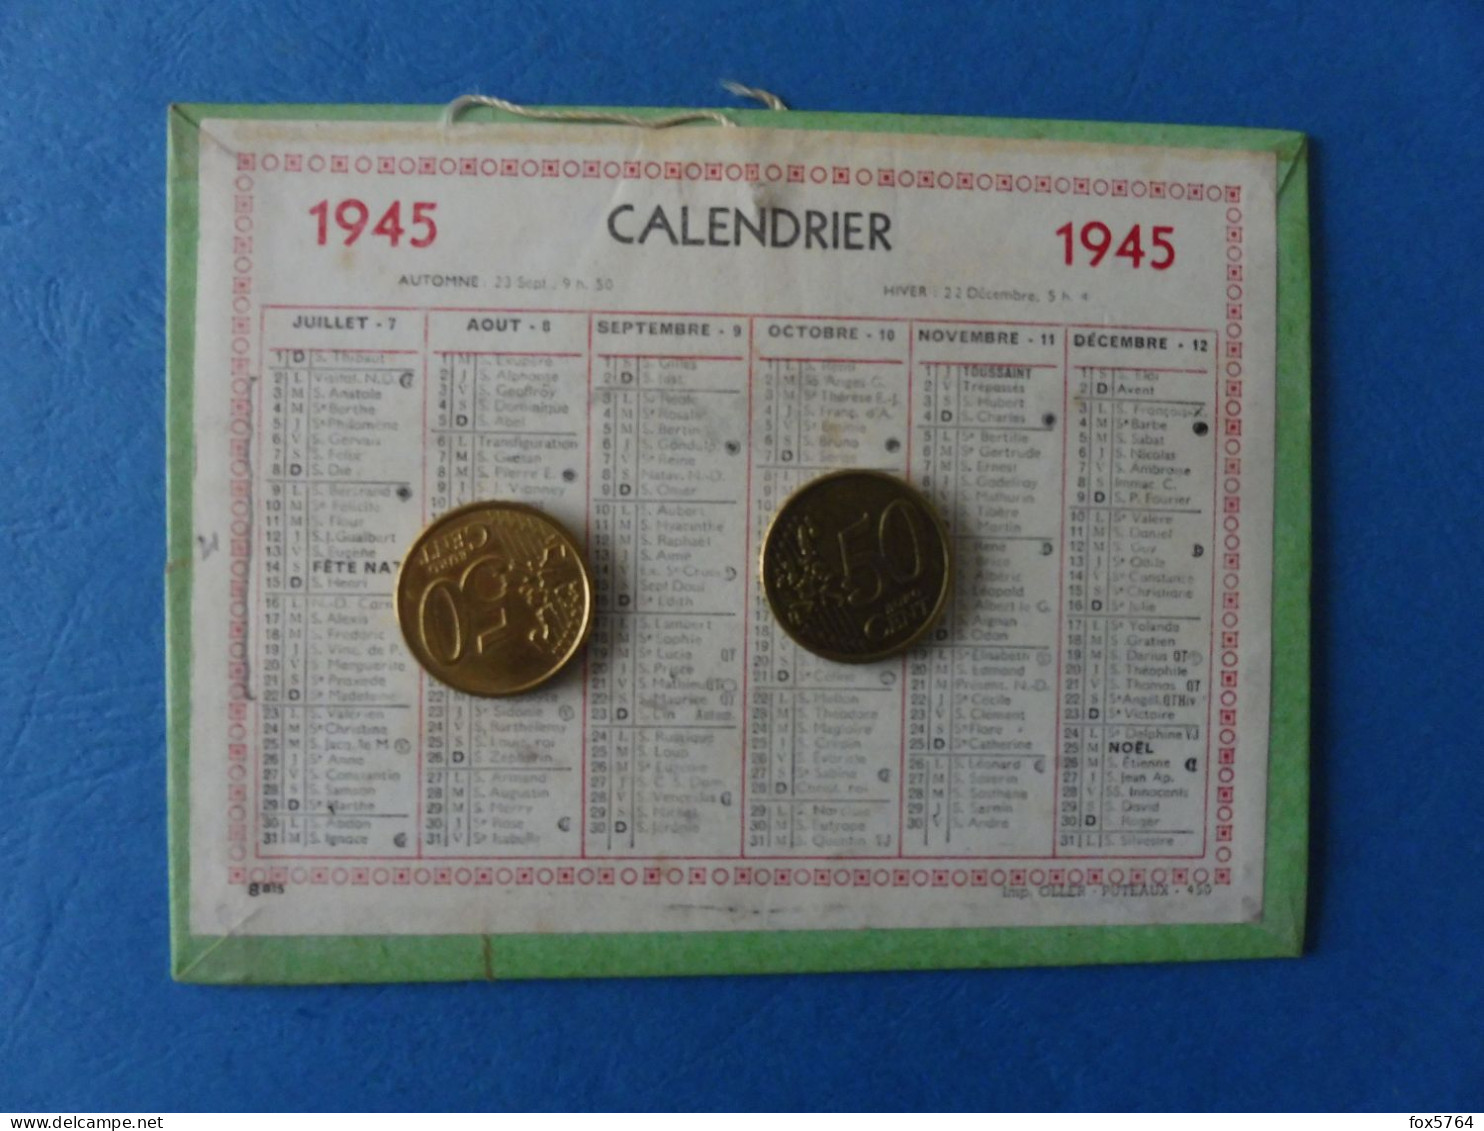 WW2 / CALENDRIER / POILU CAMPAGNE DE FRANCE / ORIGINAL / 07 - Kleinformat : 1941-60